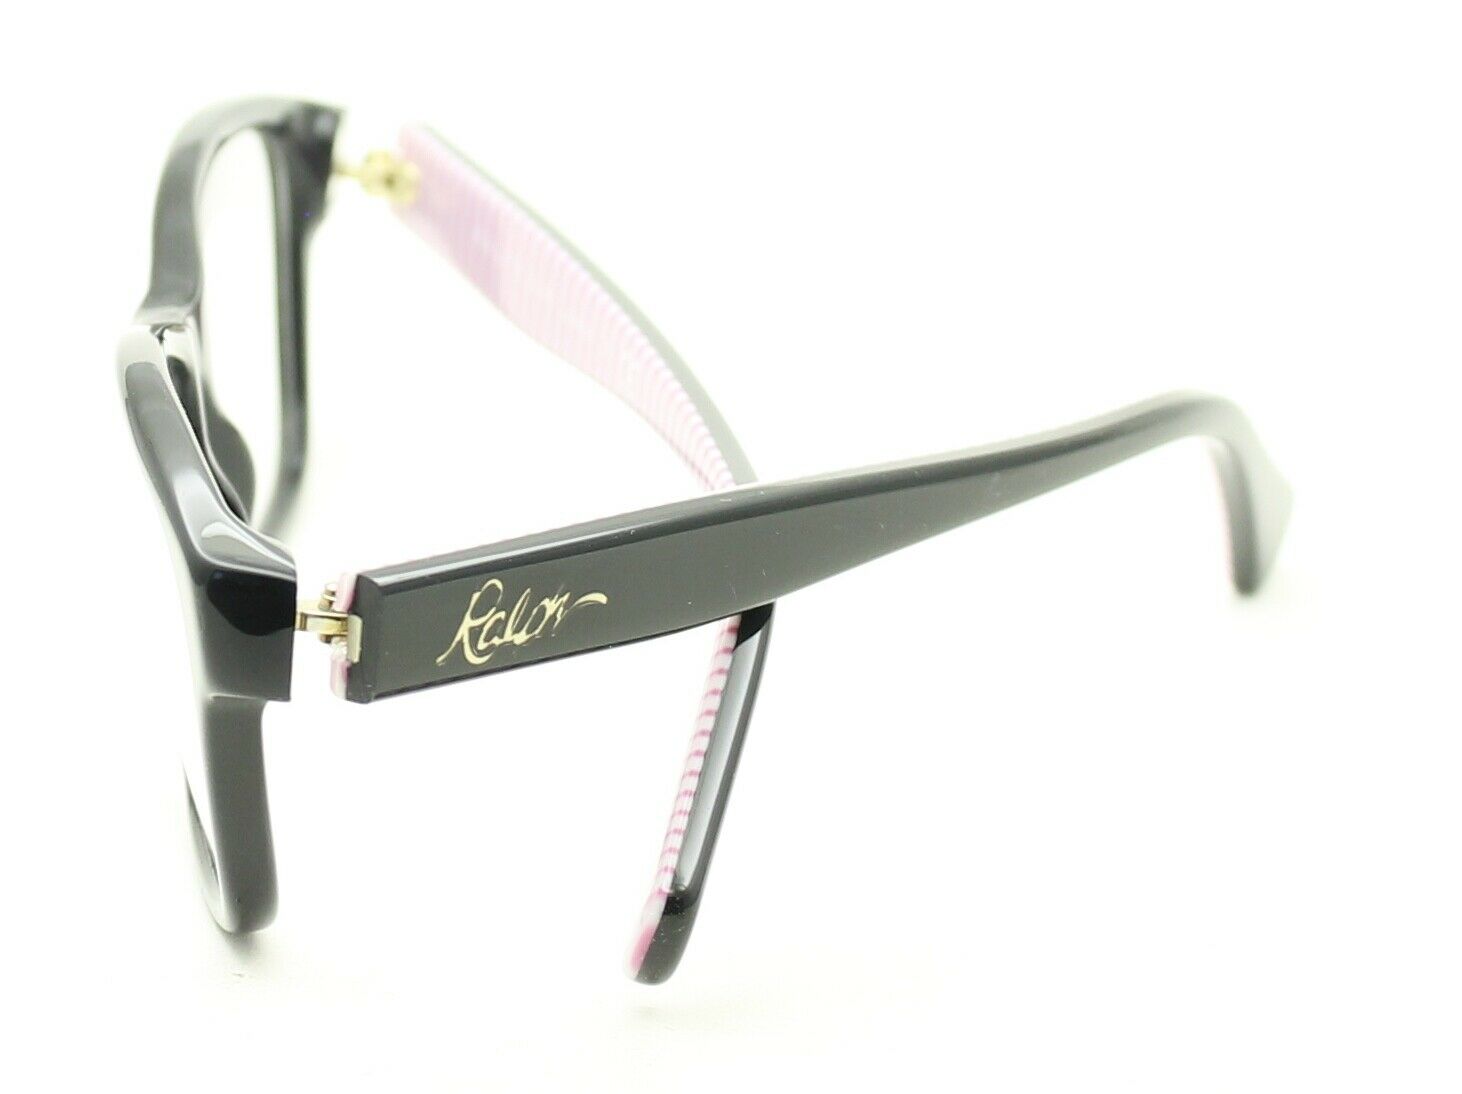 RALPH LAUREN RA 7108 5001 54mm Eyewear FRAMES RX Optical Eyeglasses Glasses -New